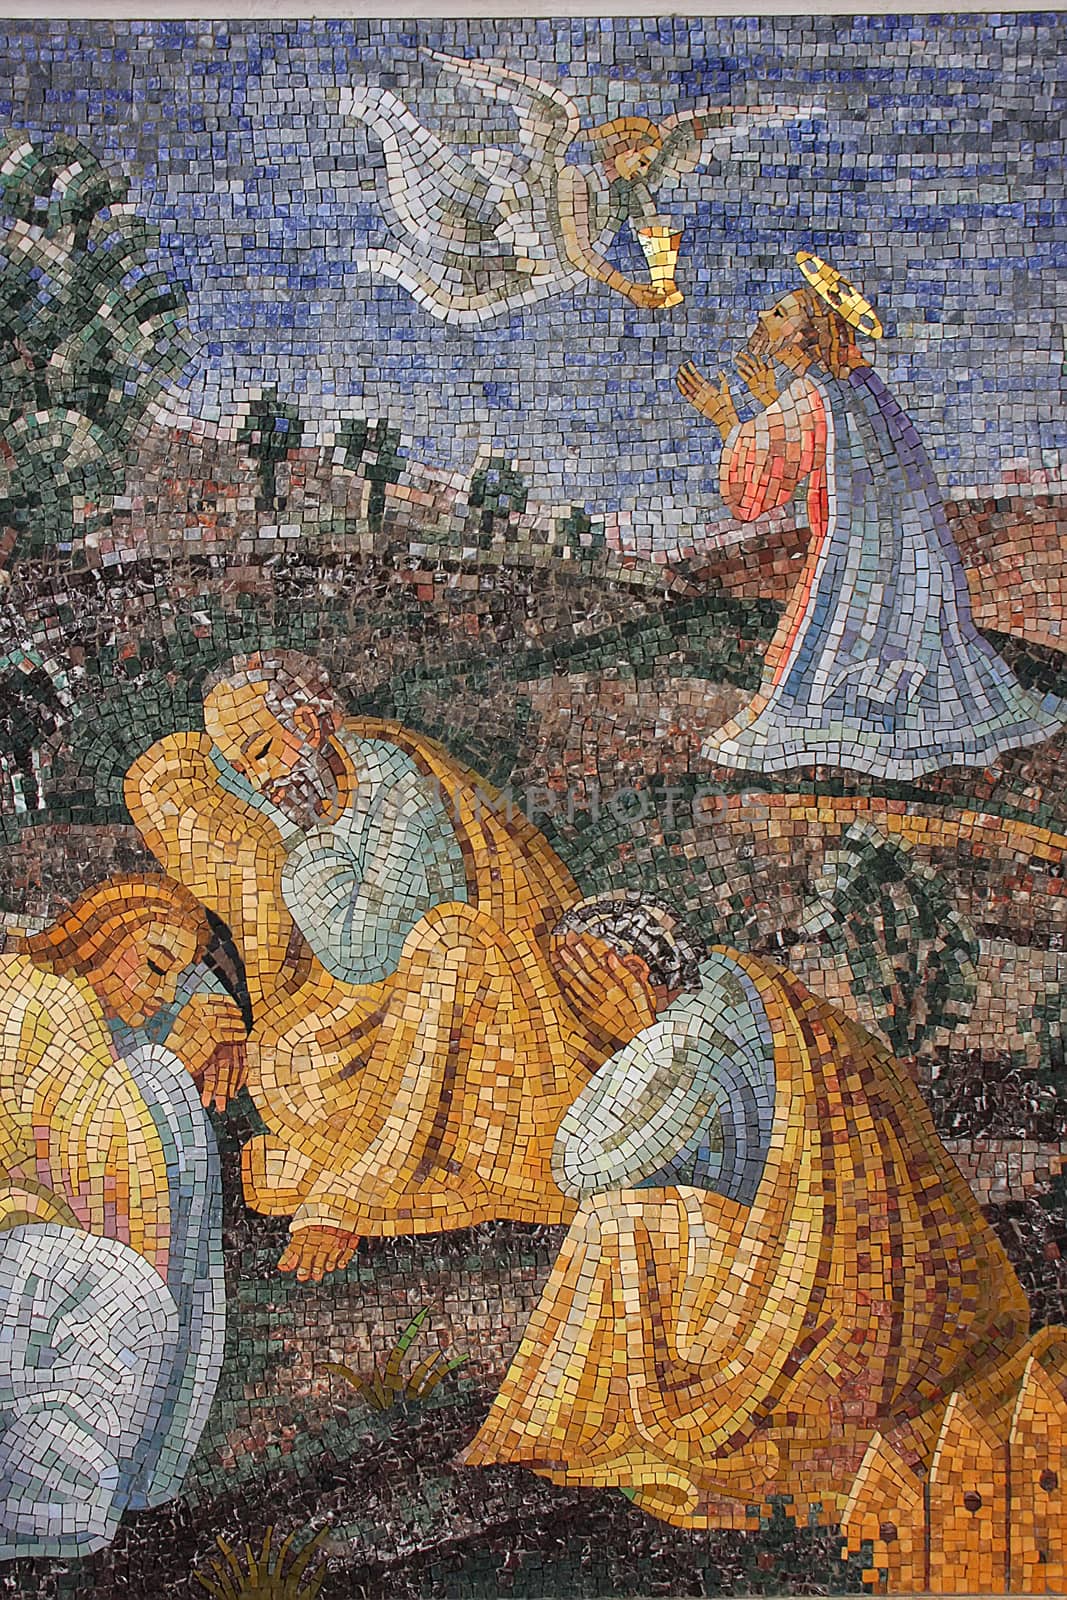 Dome mosaics, Saint Peters Basilica, Vatican City, Rome by donya_nedomam